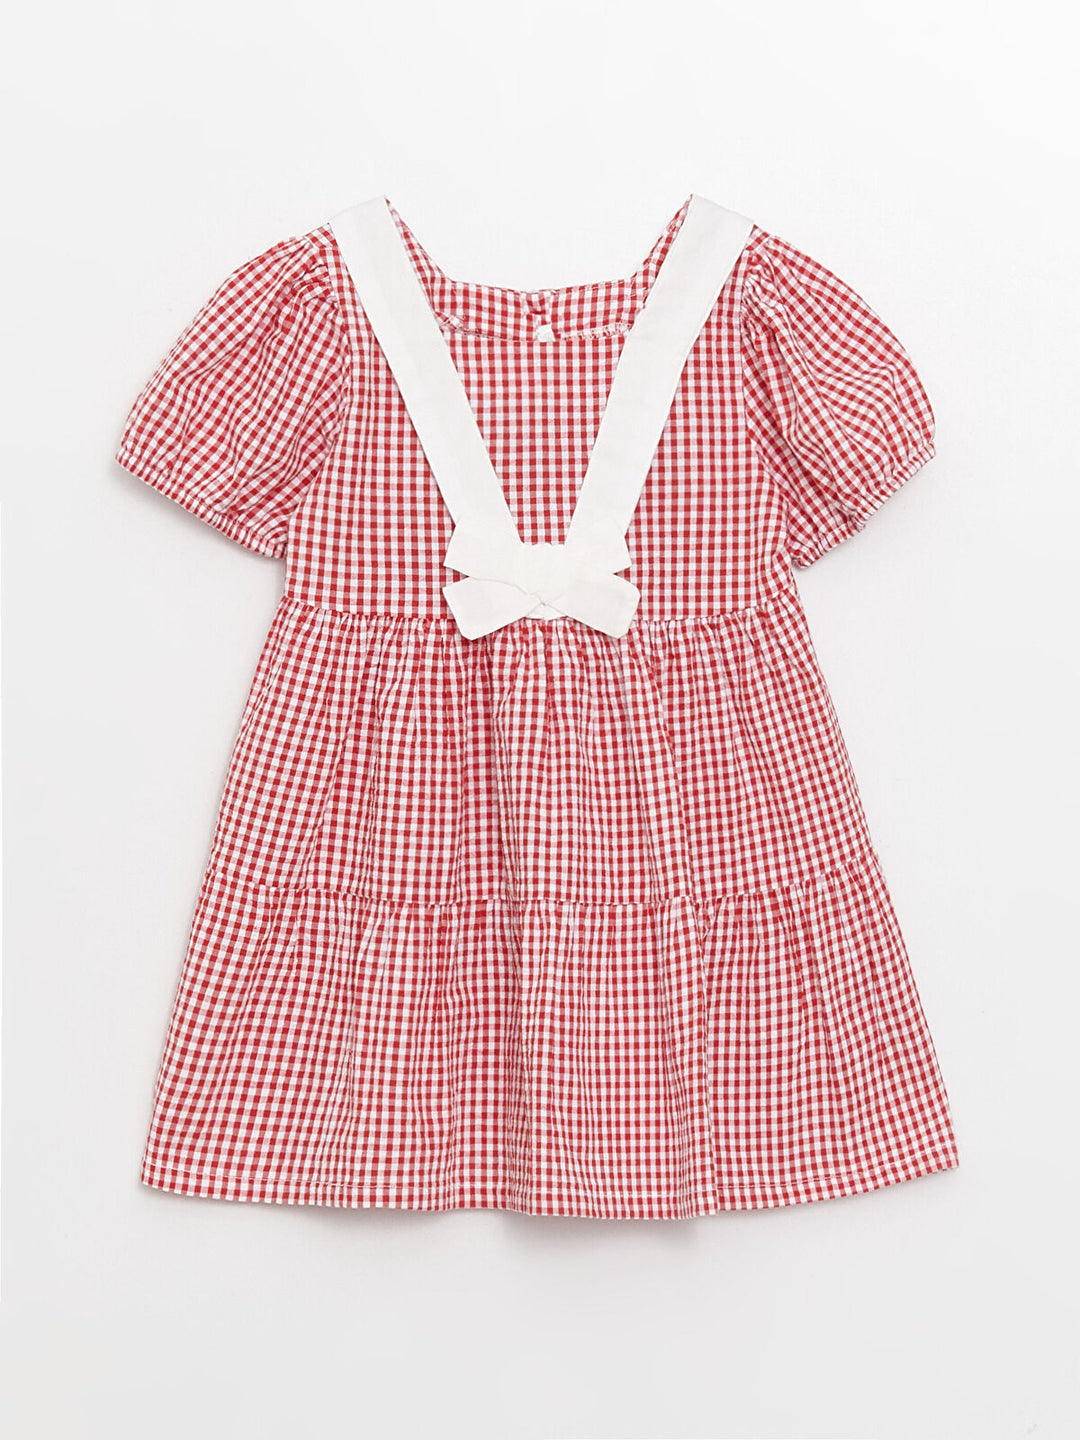 Square Collar Short Sleeve Plaid Baby Girl Dress